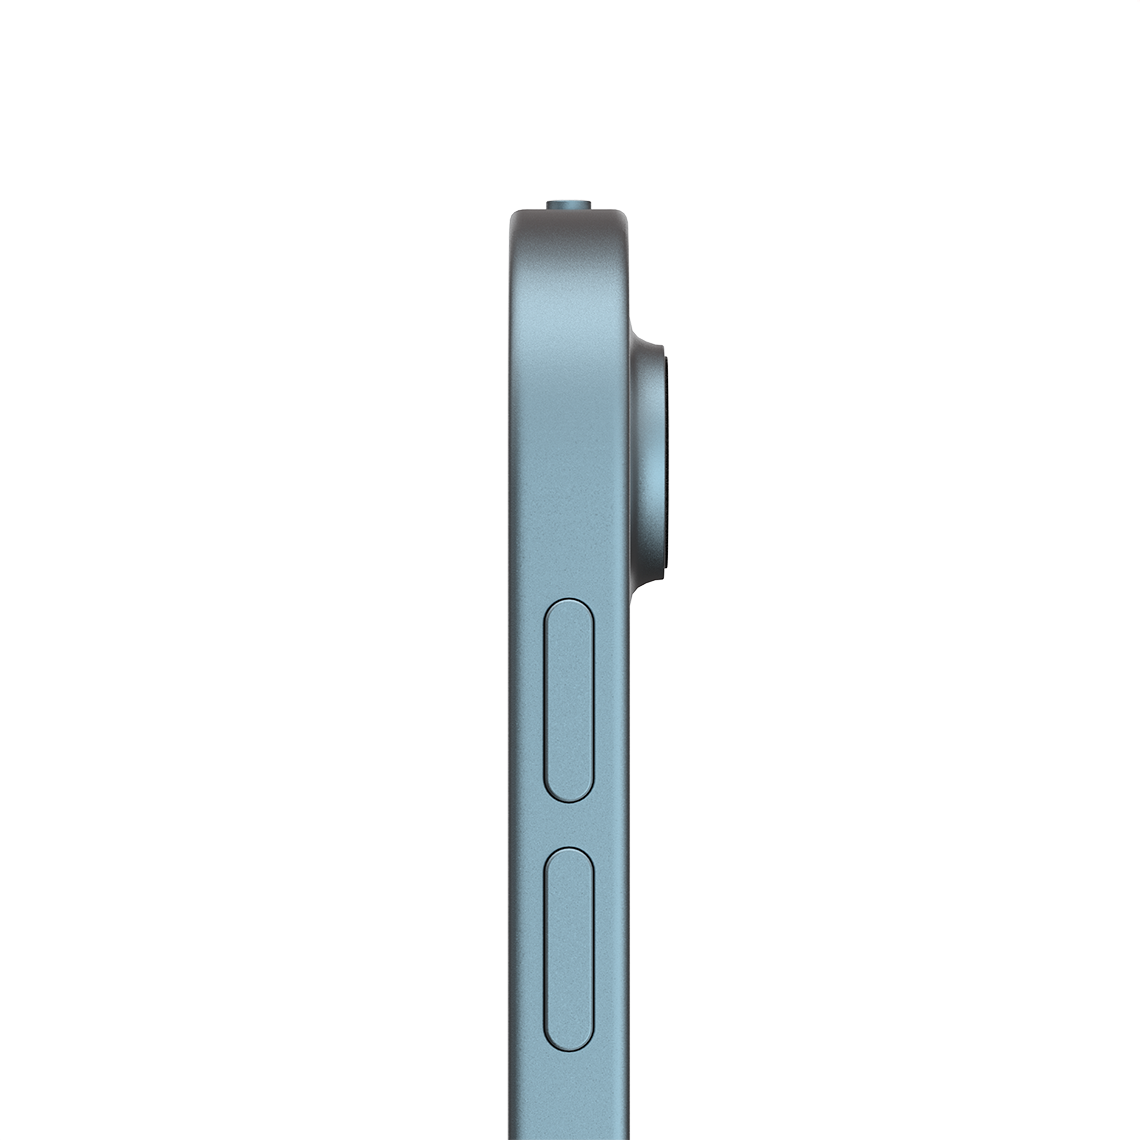 Apple iPad Air 10.9-inch 5th Generation - Blue - 64GB, Wi-Fi, Grade B